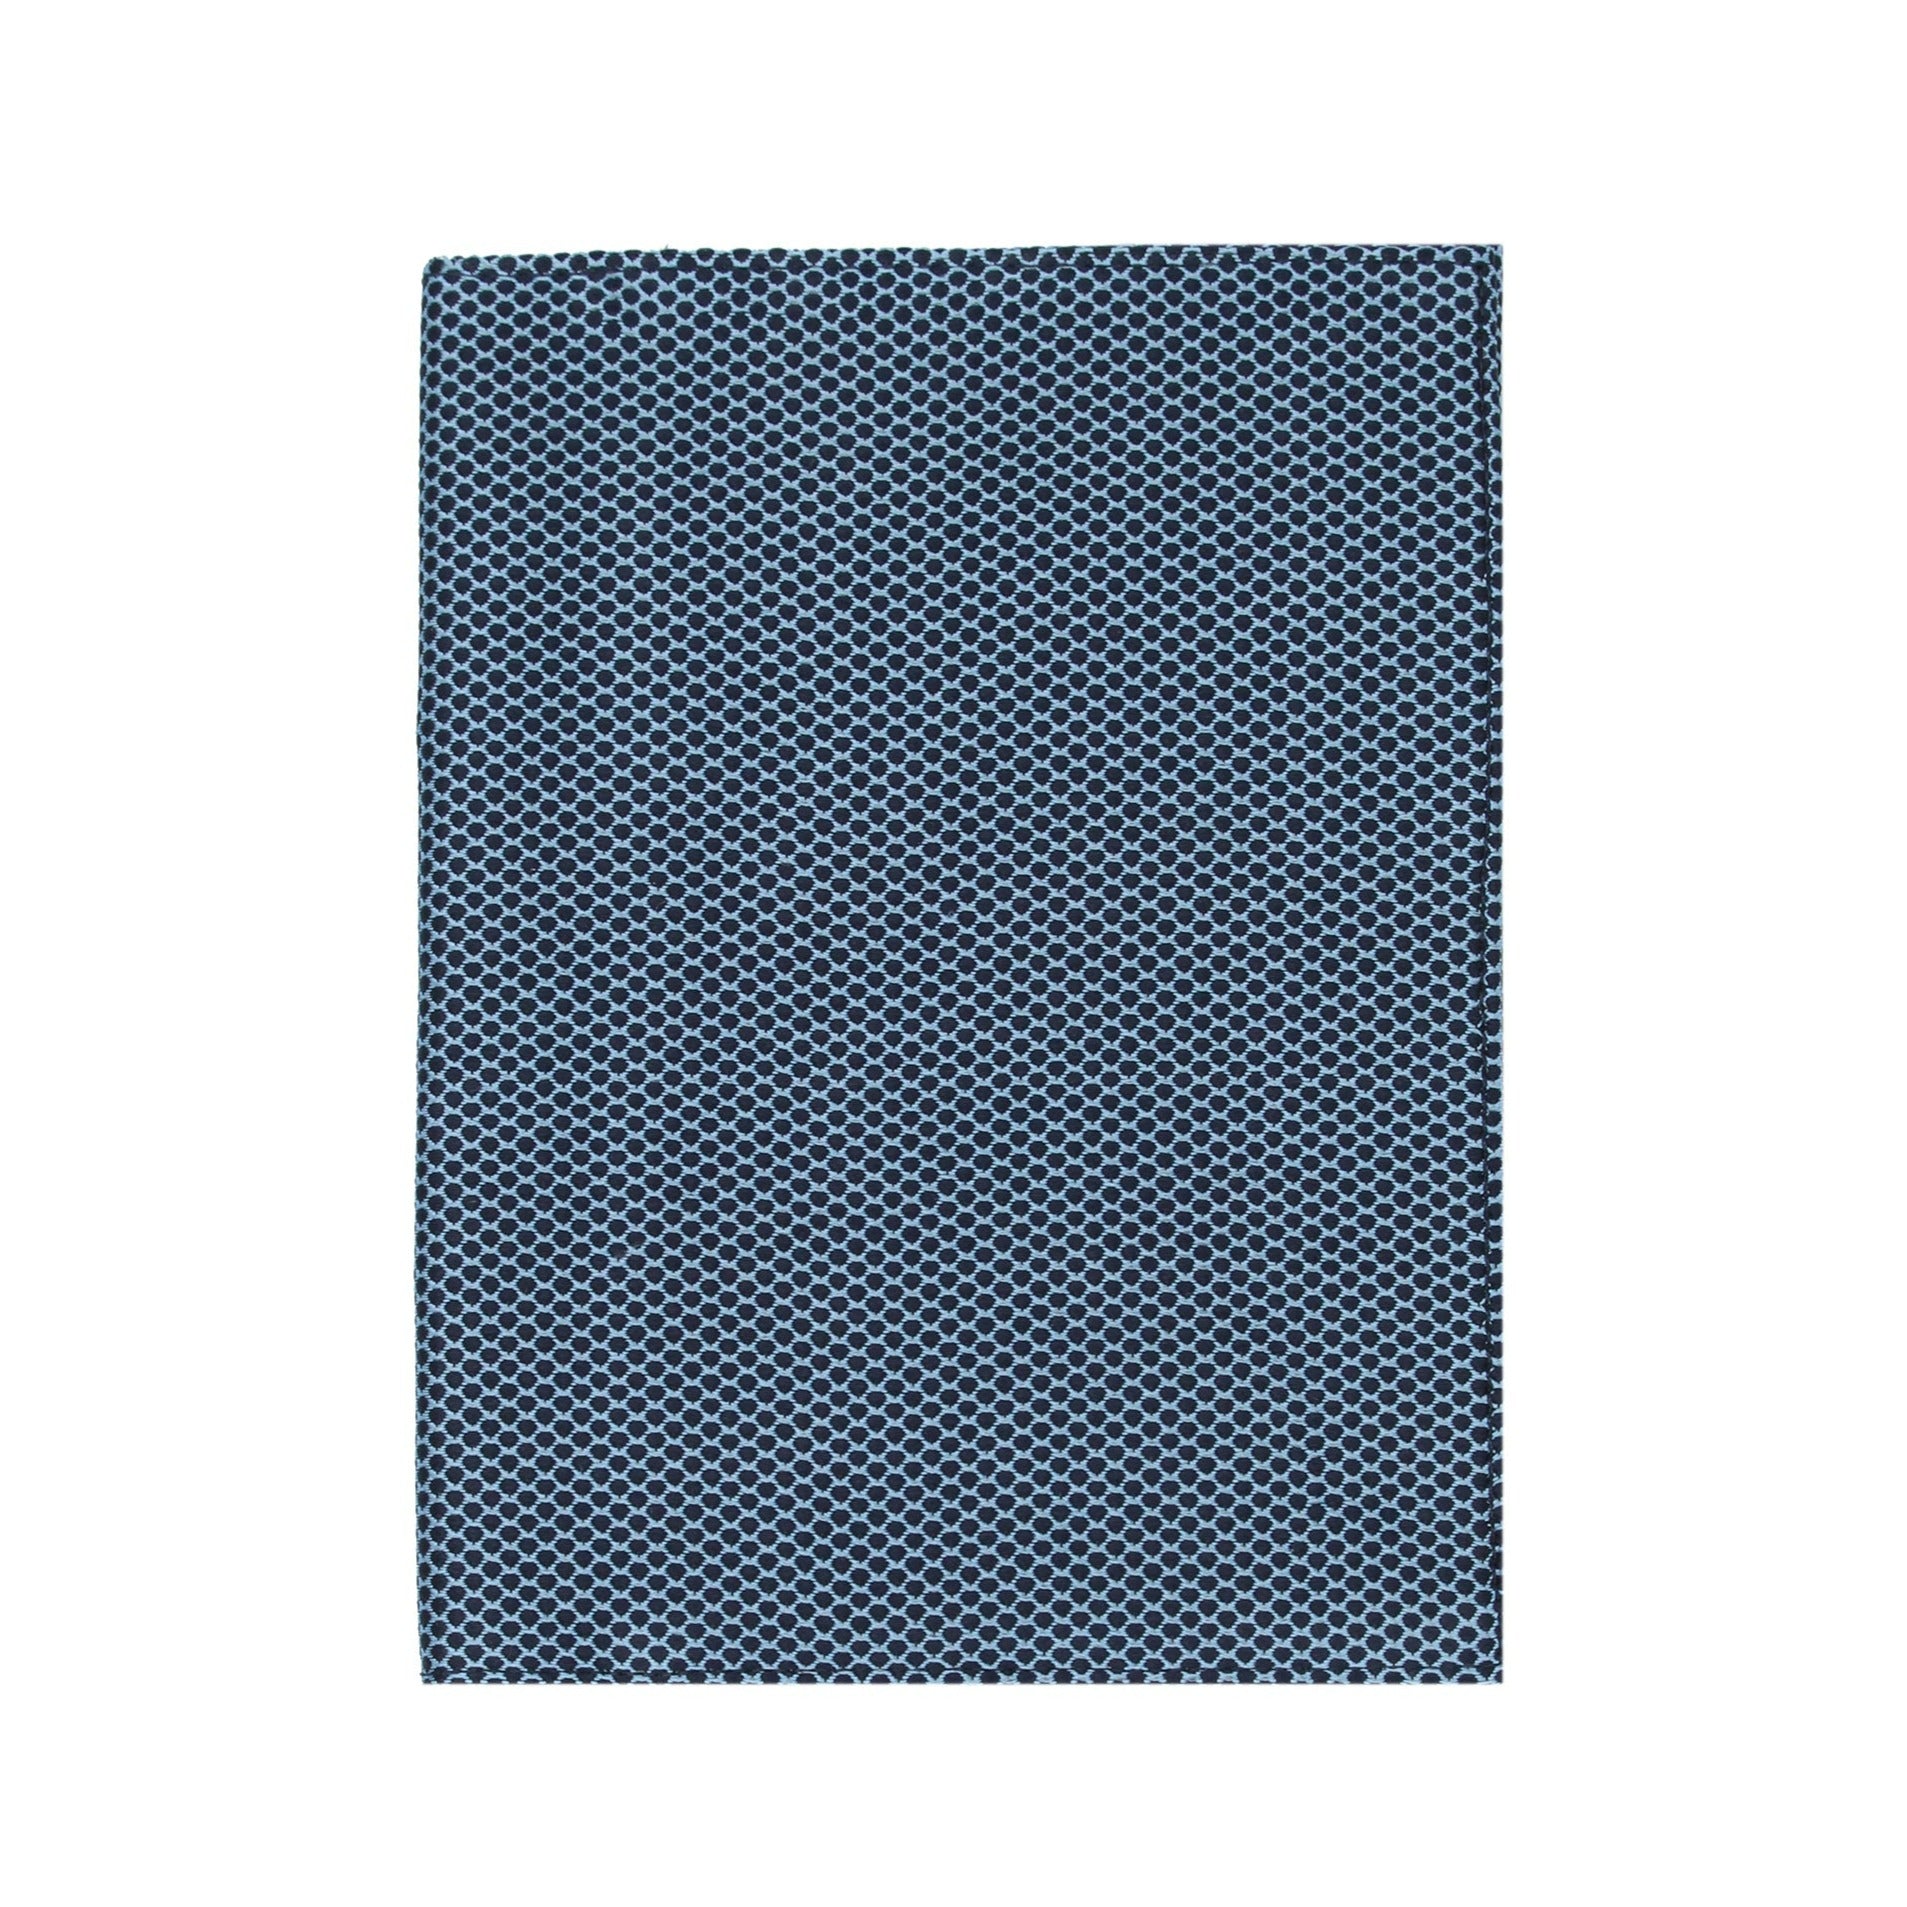 Silk document holder light and dark blue pattern